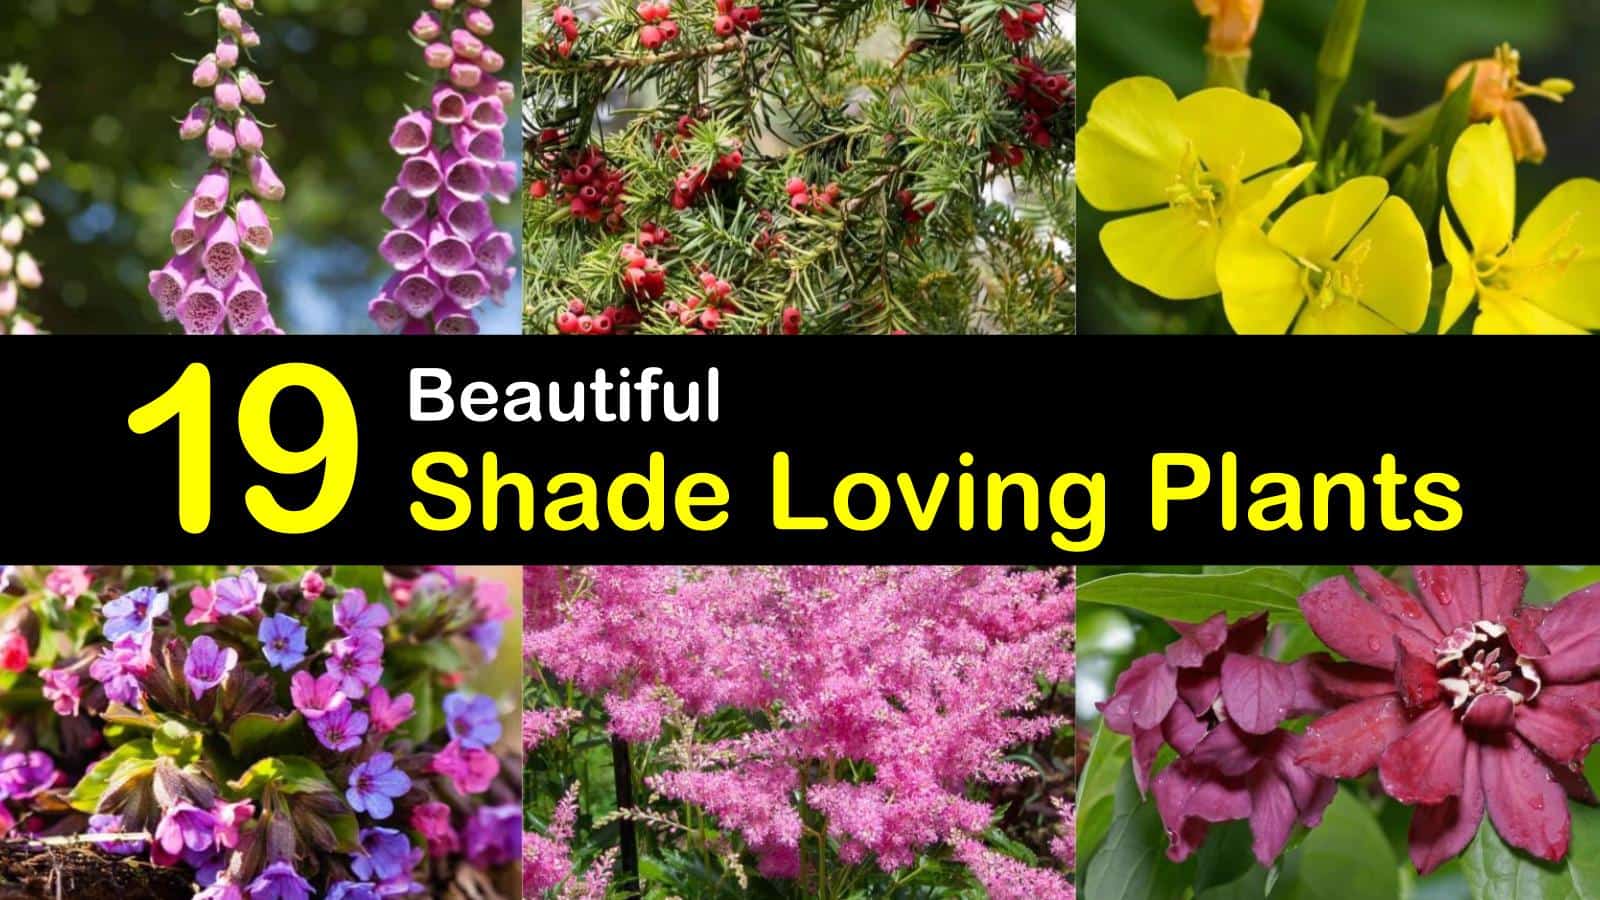 20 Beautiful Shade Loving Plants